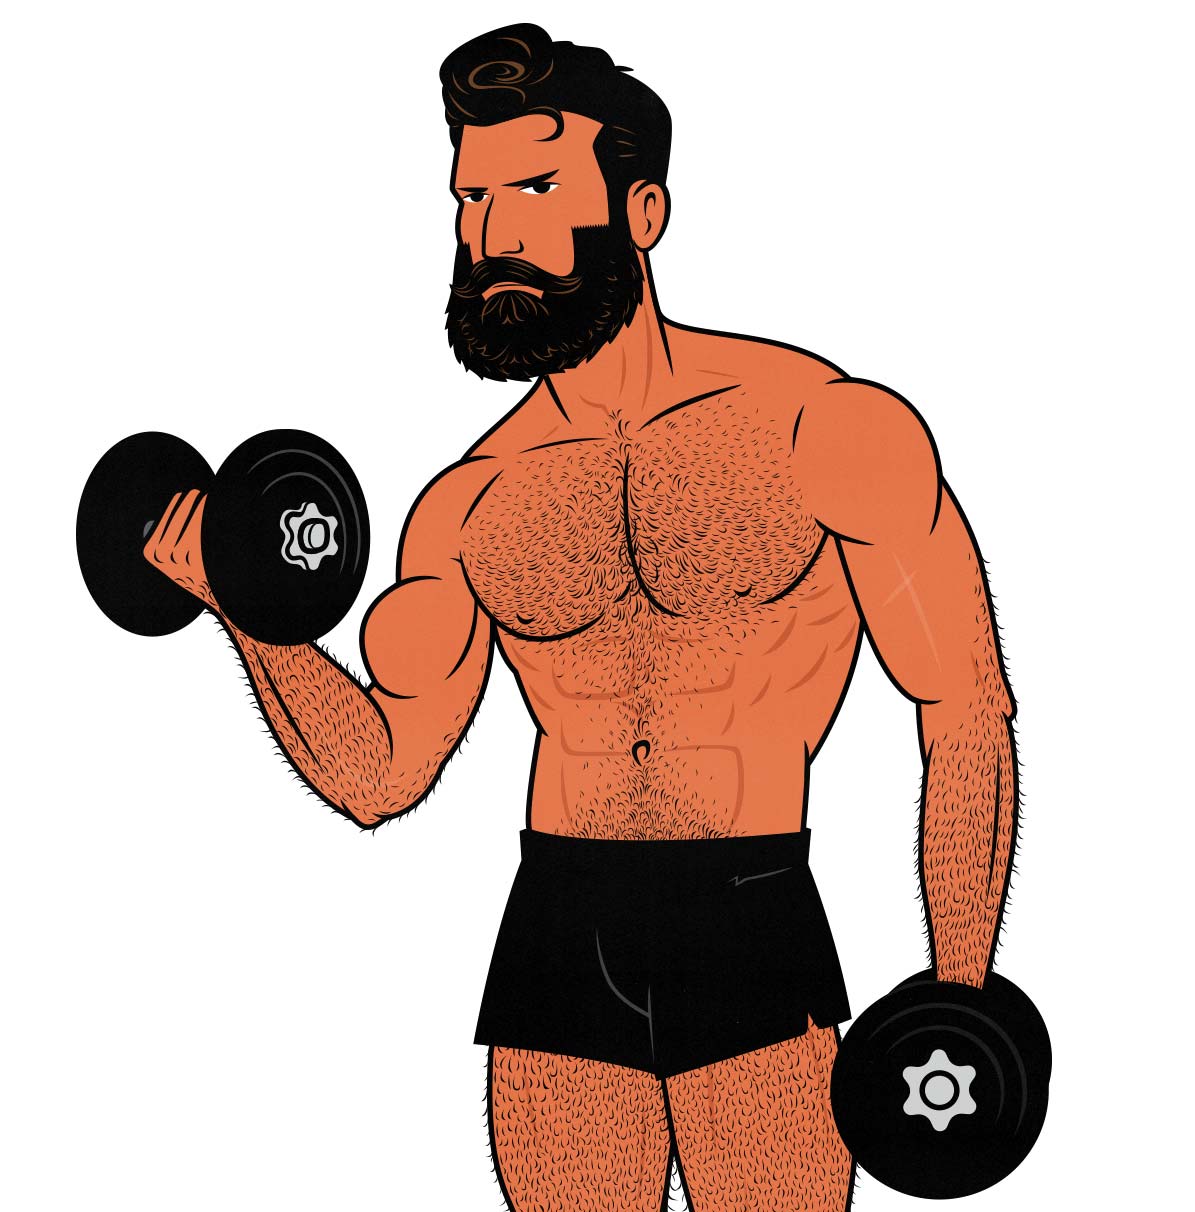 Illustration of a bodybuilder doing a bro split.